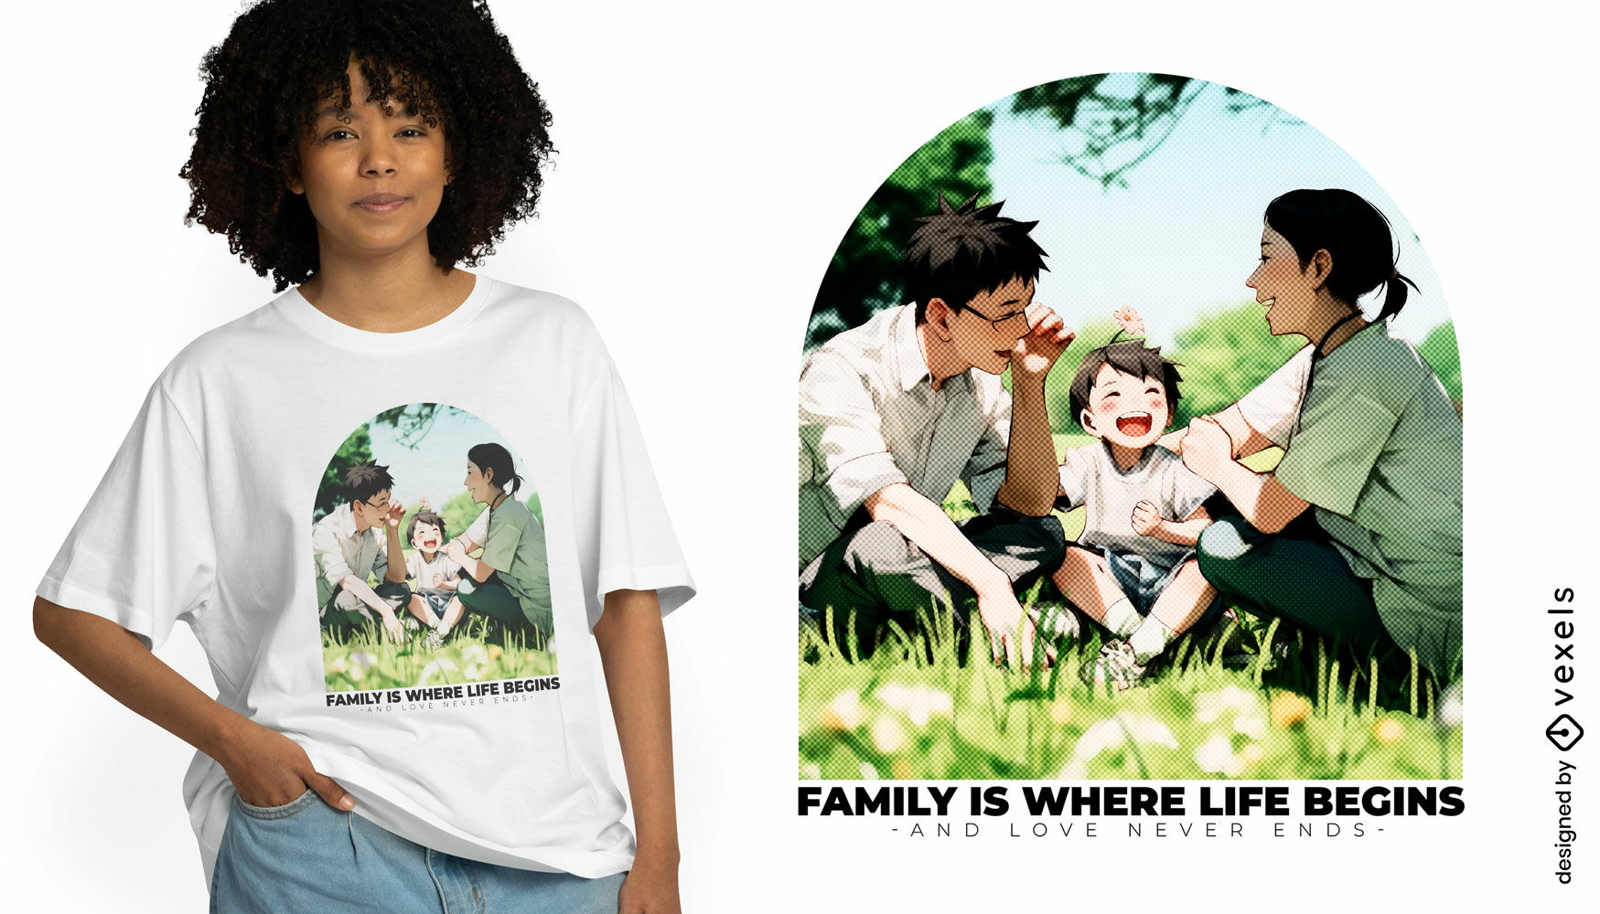 Family bonding quote t-shirt design